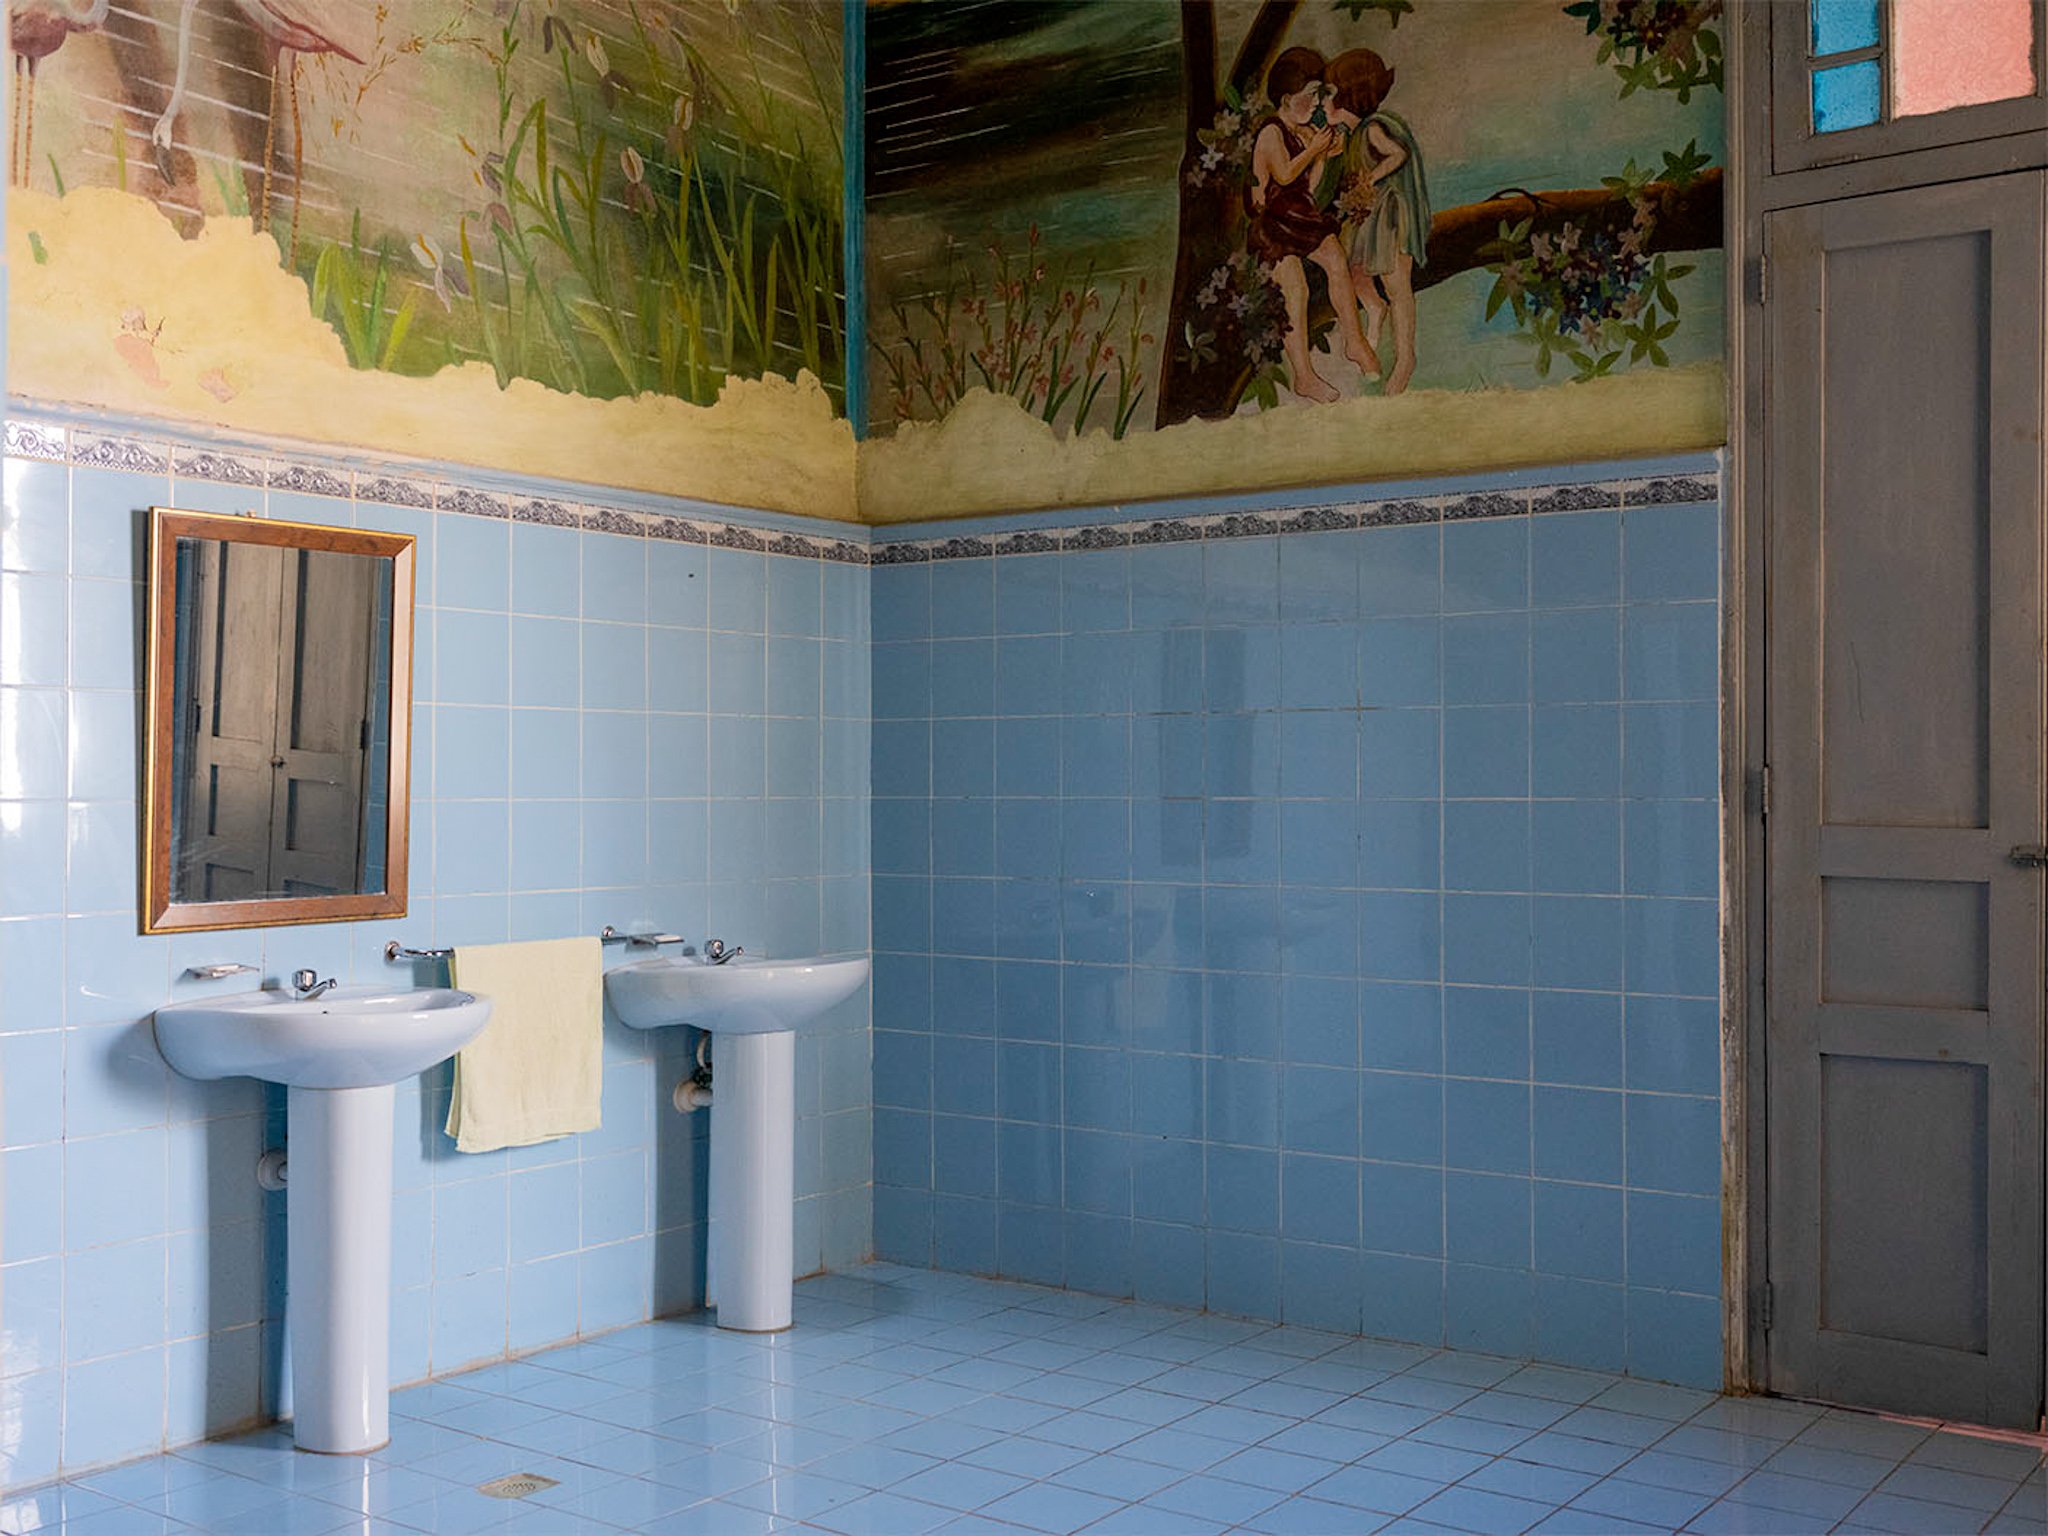 Bathroom with Mural, Havana